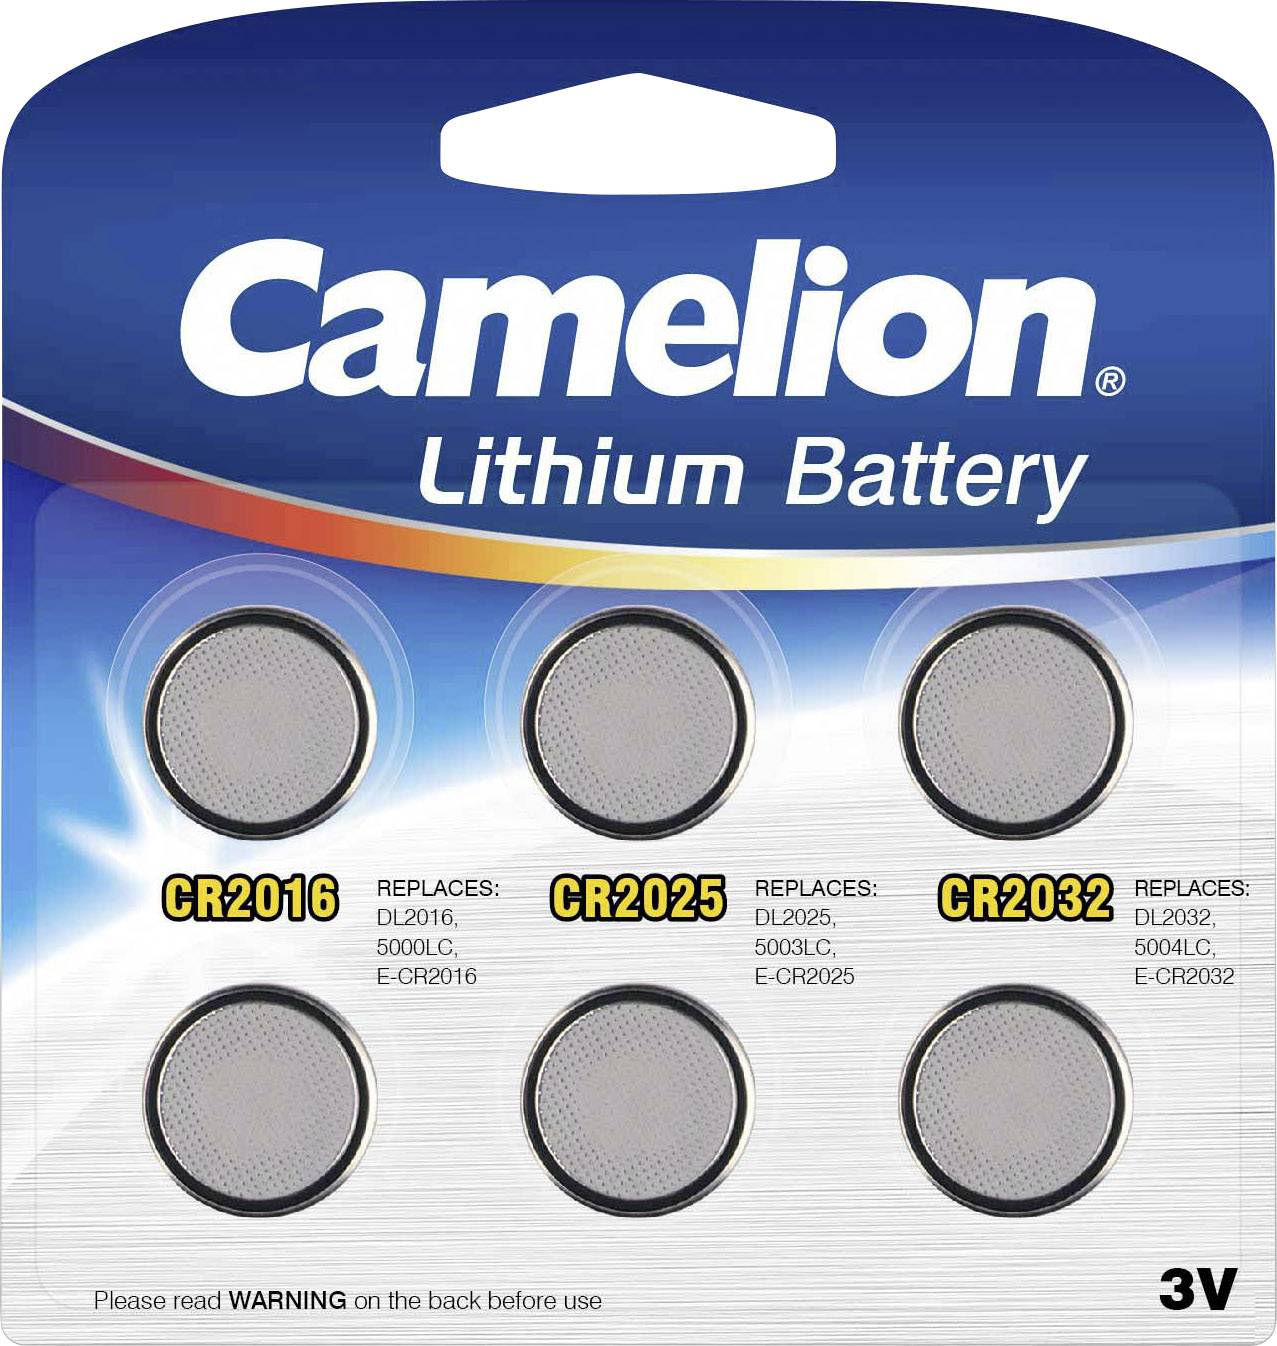 2x CR2016 Litihum 3V 2x CR2025 Camelion Knopfzellen Batterien im Set 2x CR2032 